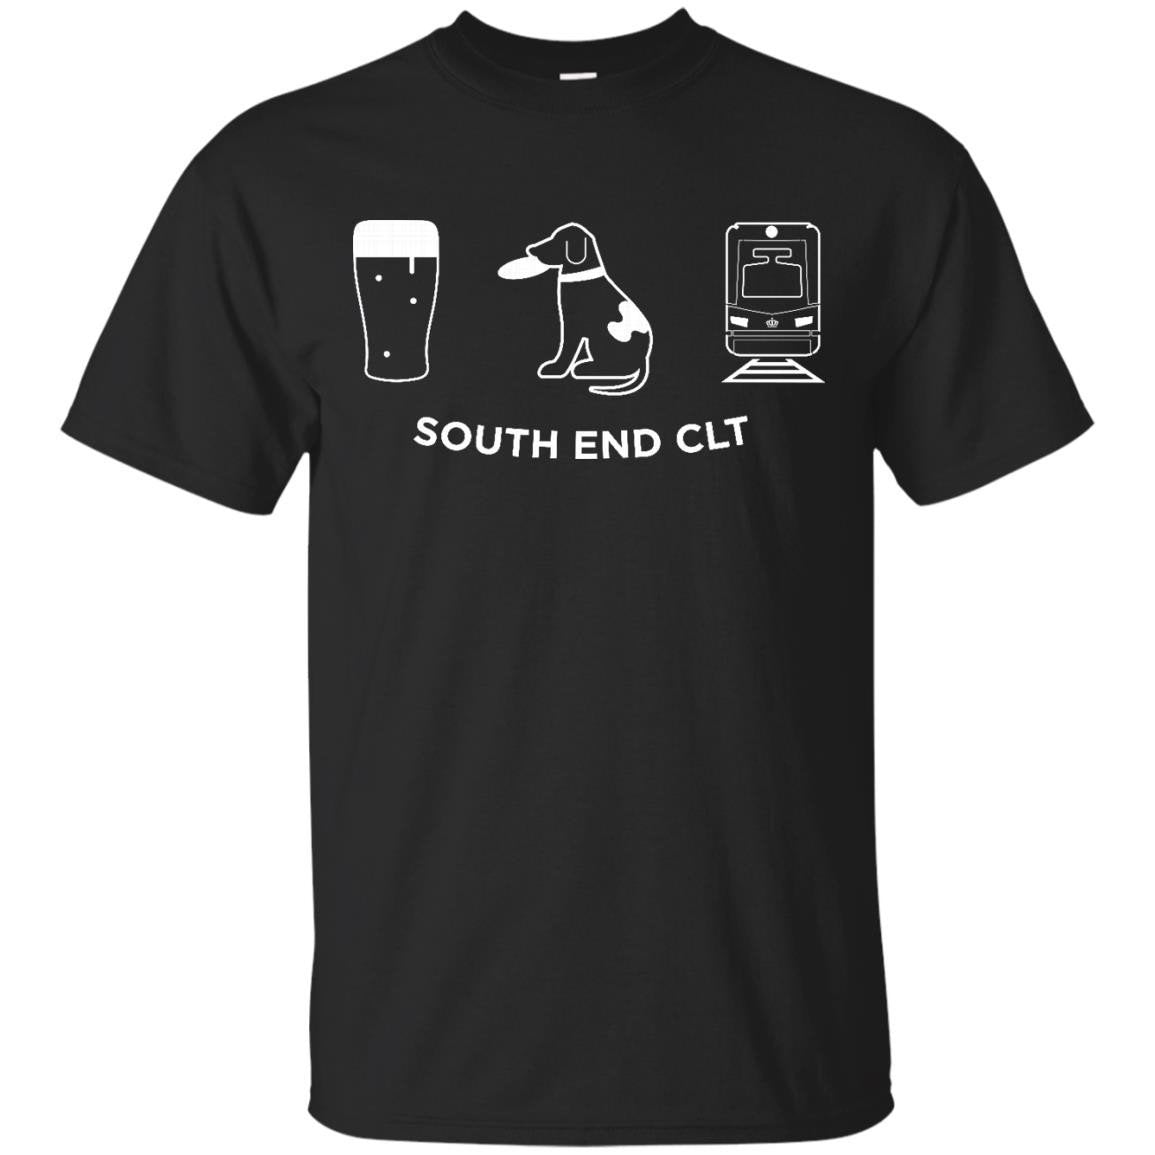 South End Charlotte, Nc T Shirt